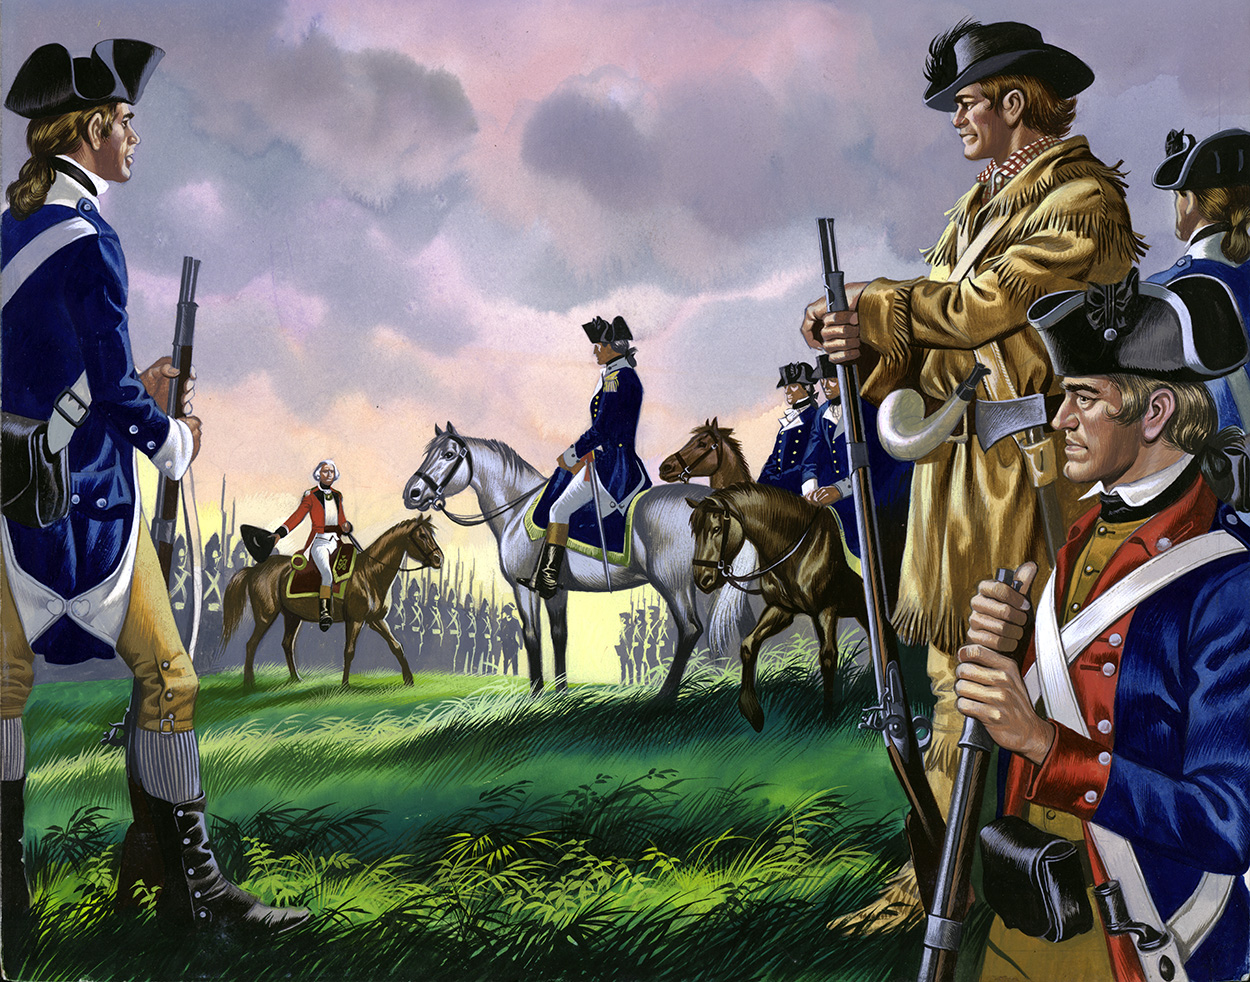 Surrender (Original) art by American War of Independence (Ron Embleton) at The Illustration Art Gallery